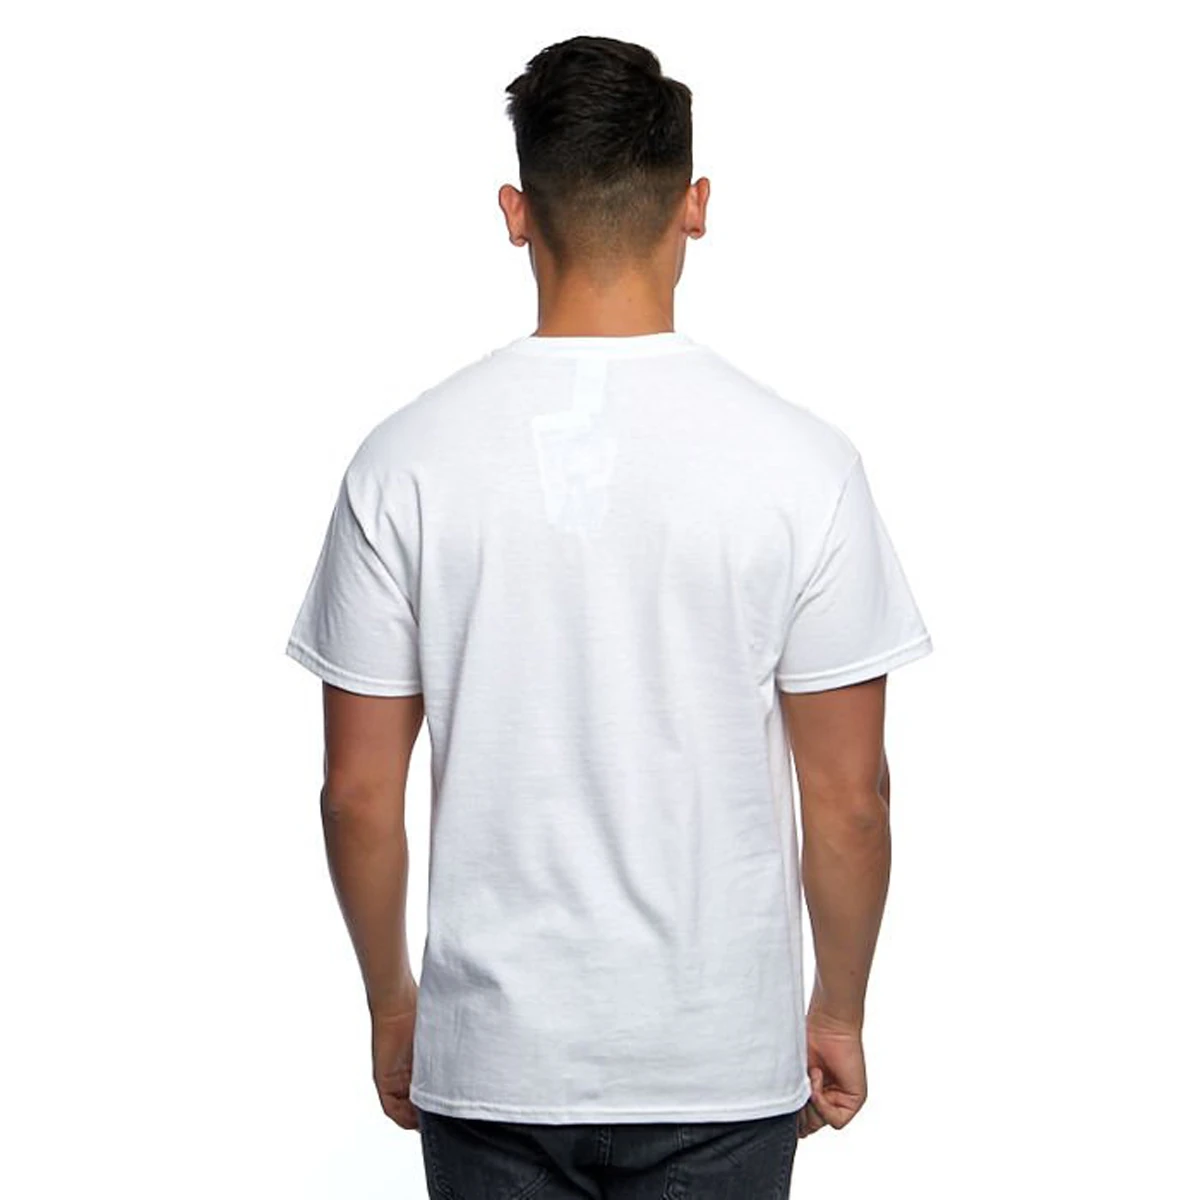 Thrasher Skate Mag White T-Shirt 110101